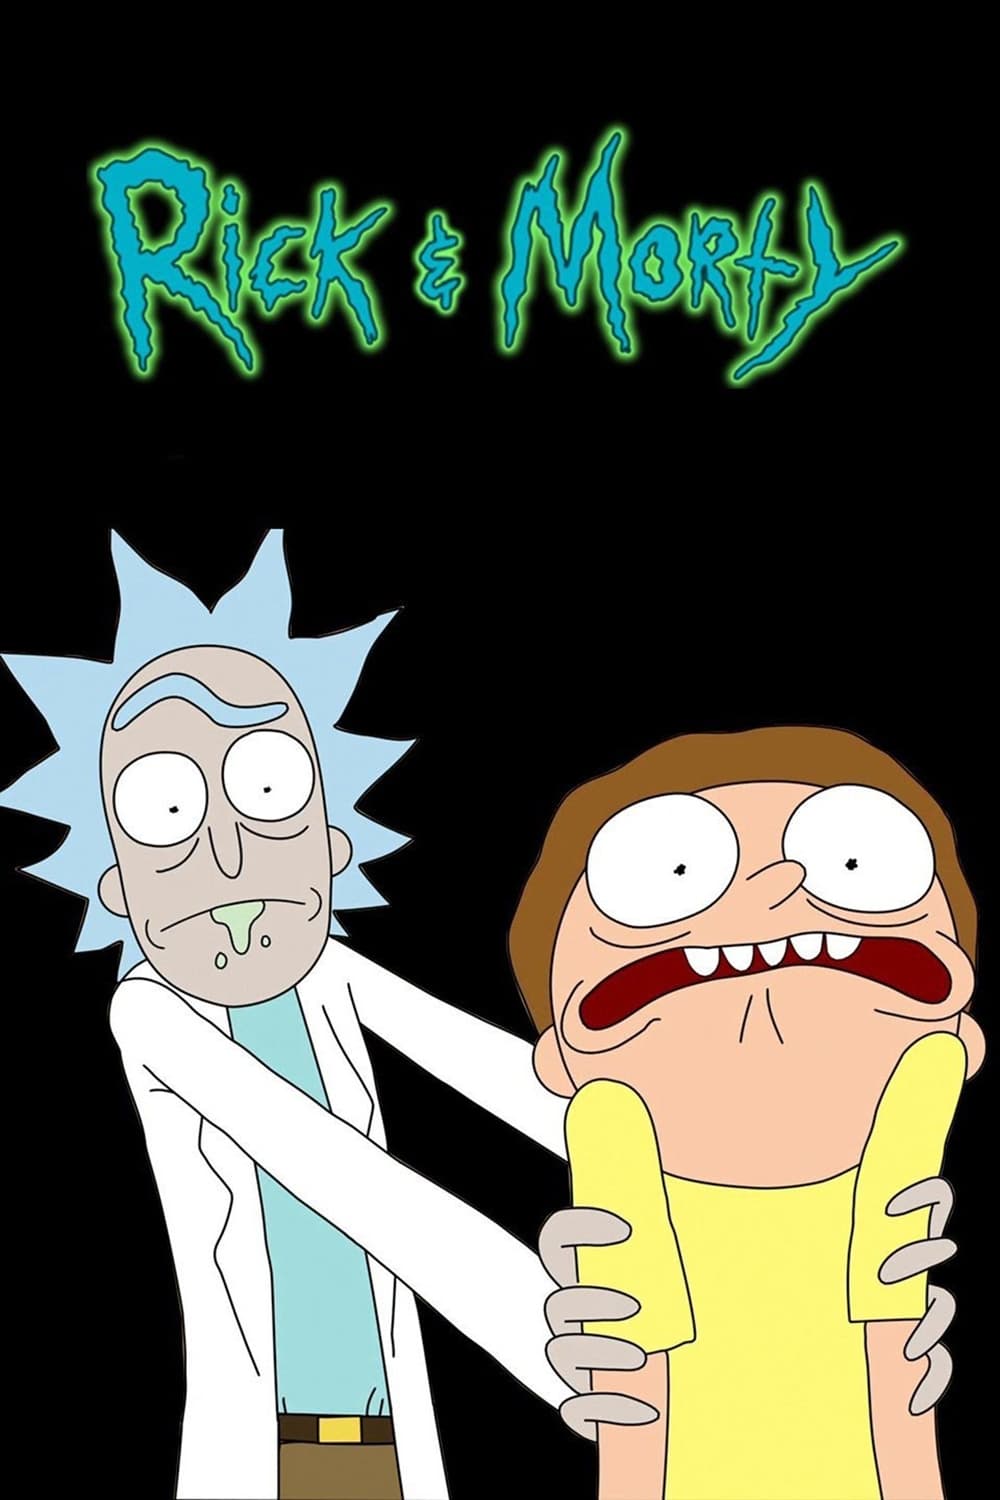 Rick & Morty S4